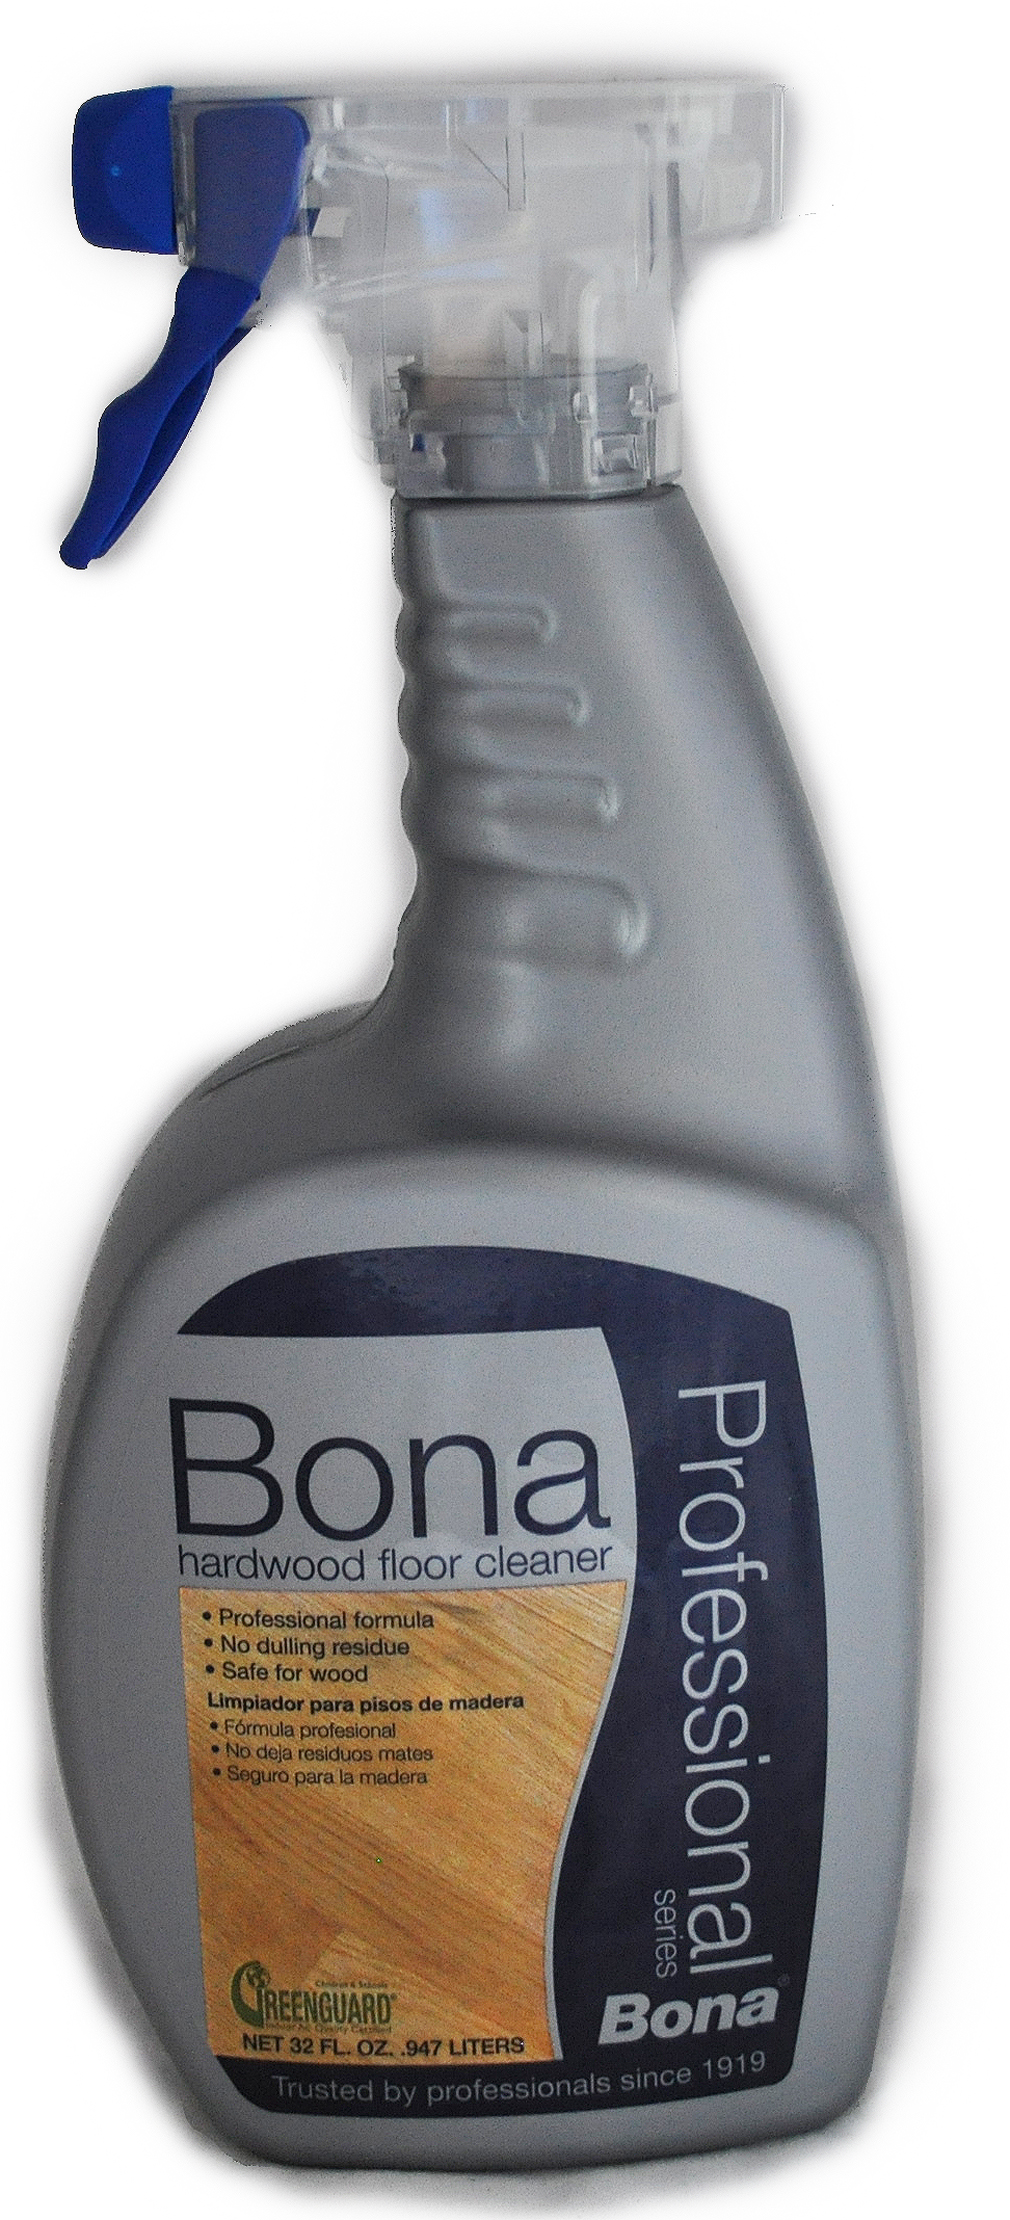 Bona Professional Series Hardwood Floor Cleaner in 32 oz Spray Bottle